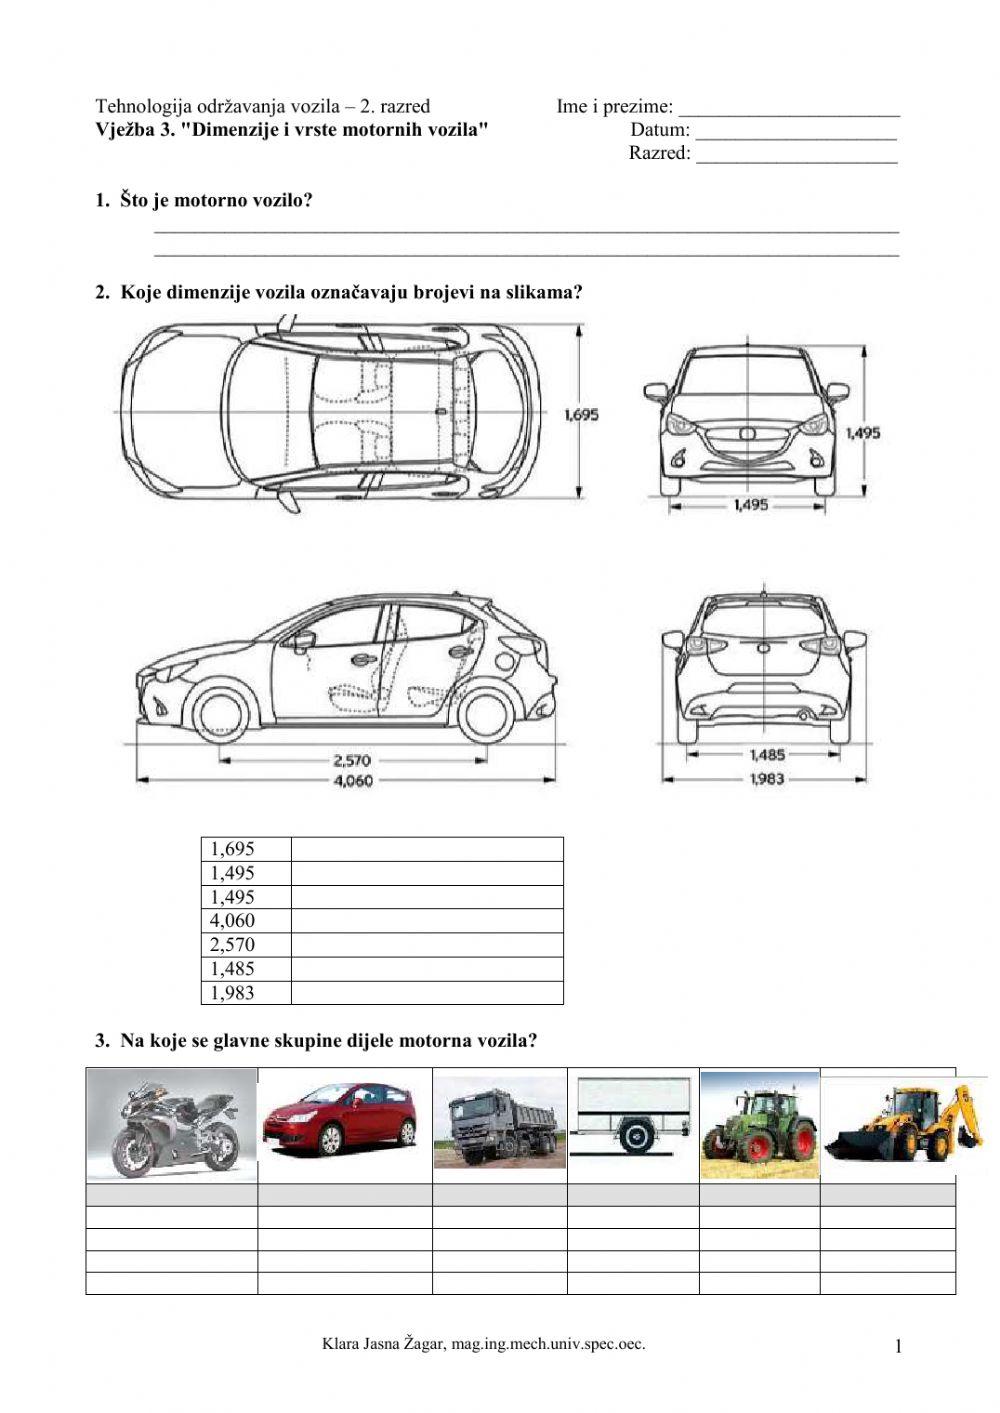 Vježba 3 - Dimenzije i vrste motornih vozila